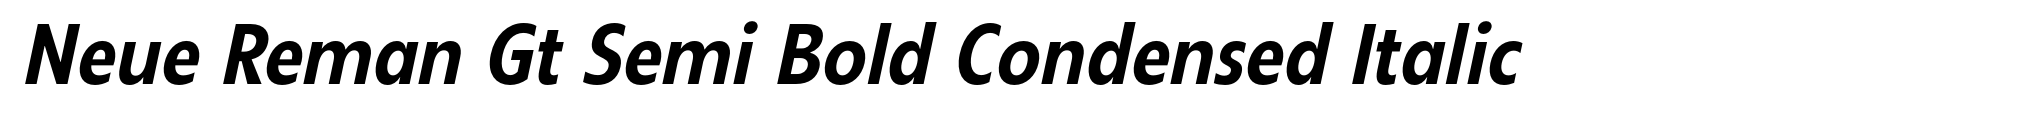 Neue Reman Gt Semi Bold Condensed Italic image